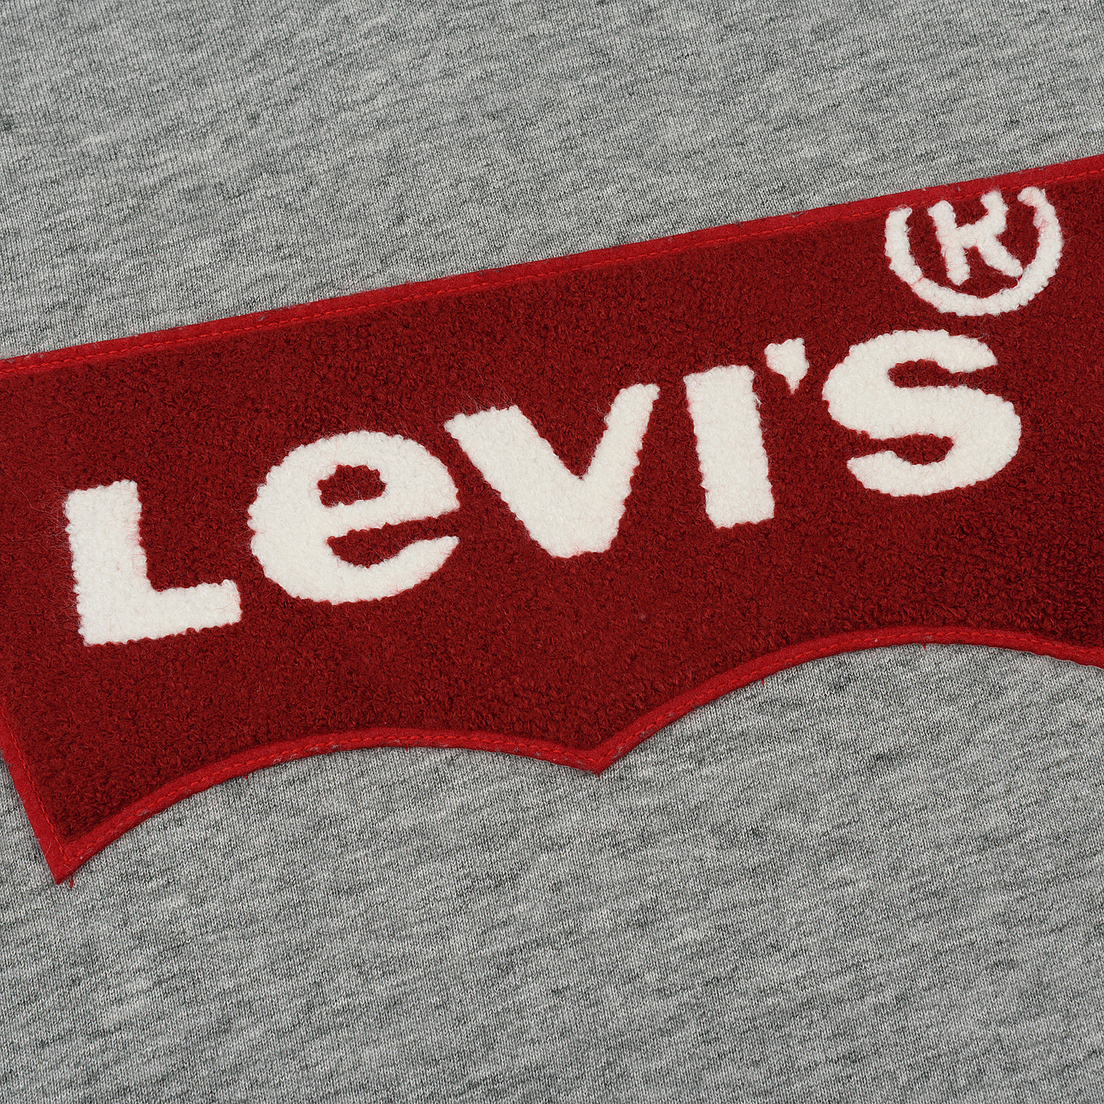 levi's super oversized hoodie